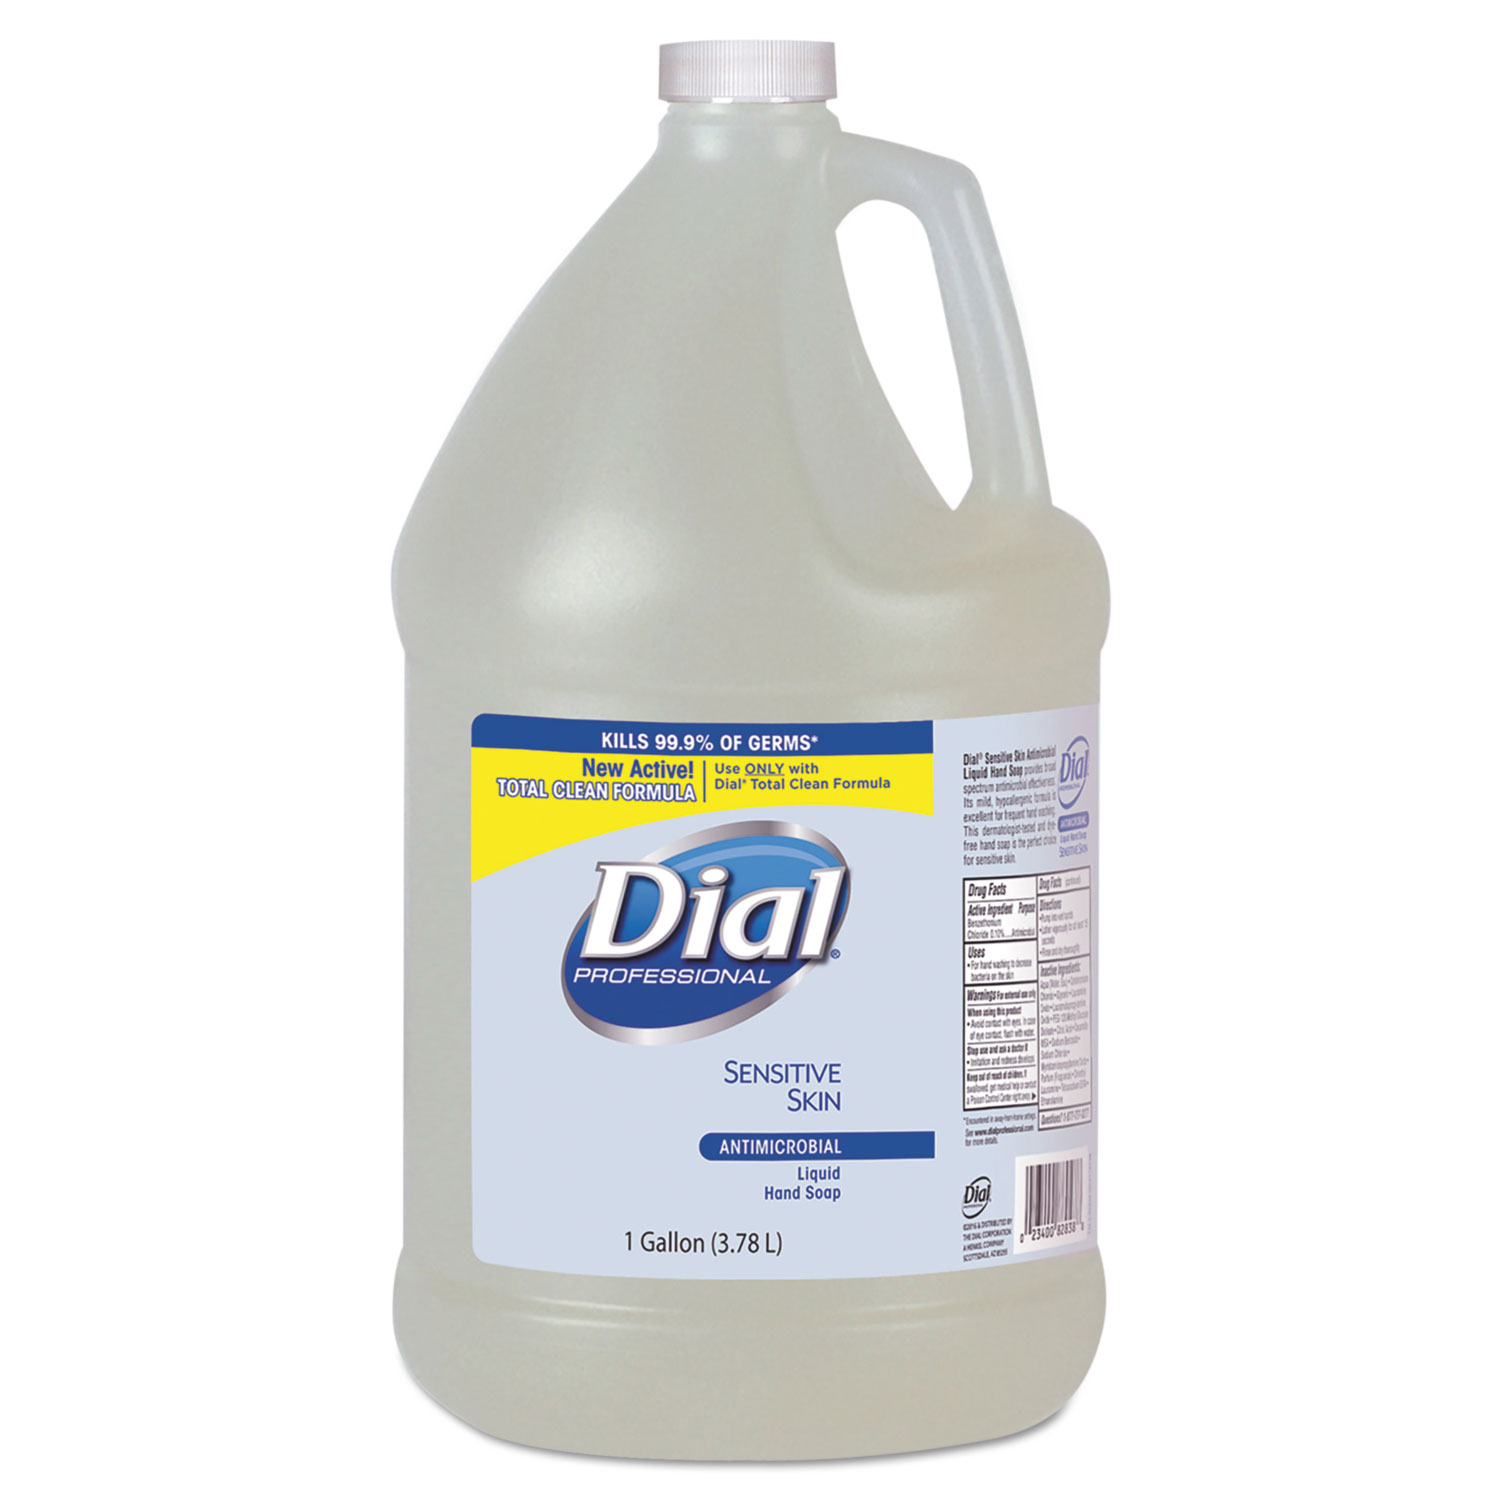  Dial Professional DIA 82838 Antimicrobial Soap for Sensitive Skin, Floral, 1 gal Bottle, 4/Carton (DIA82838) 